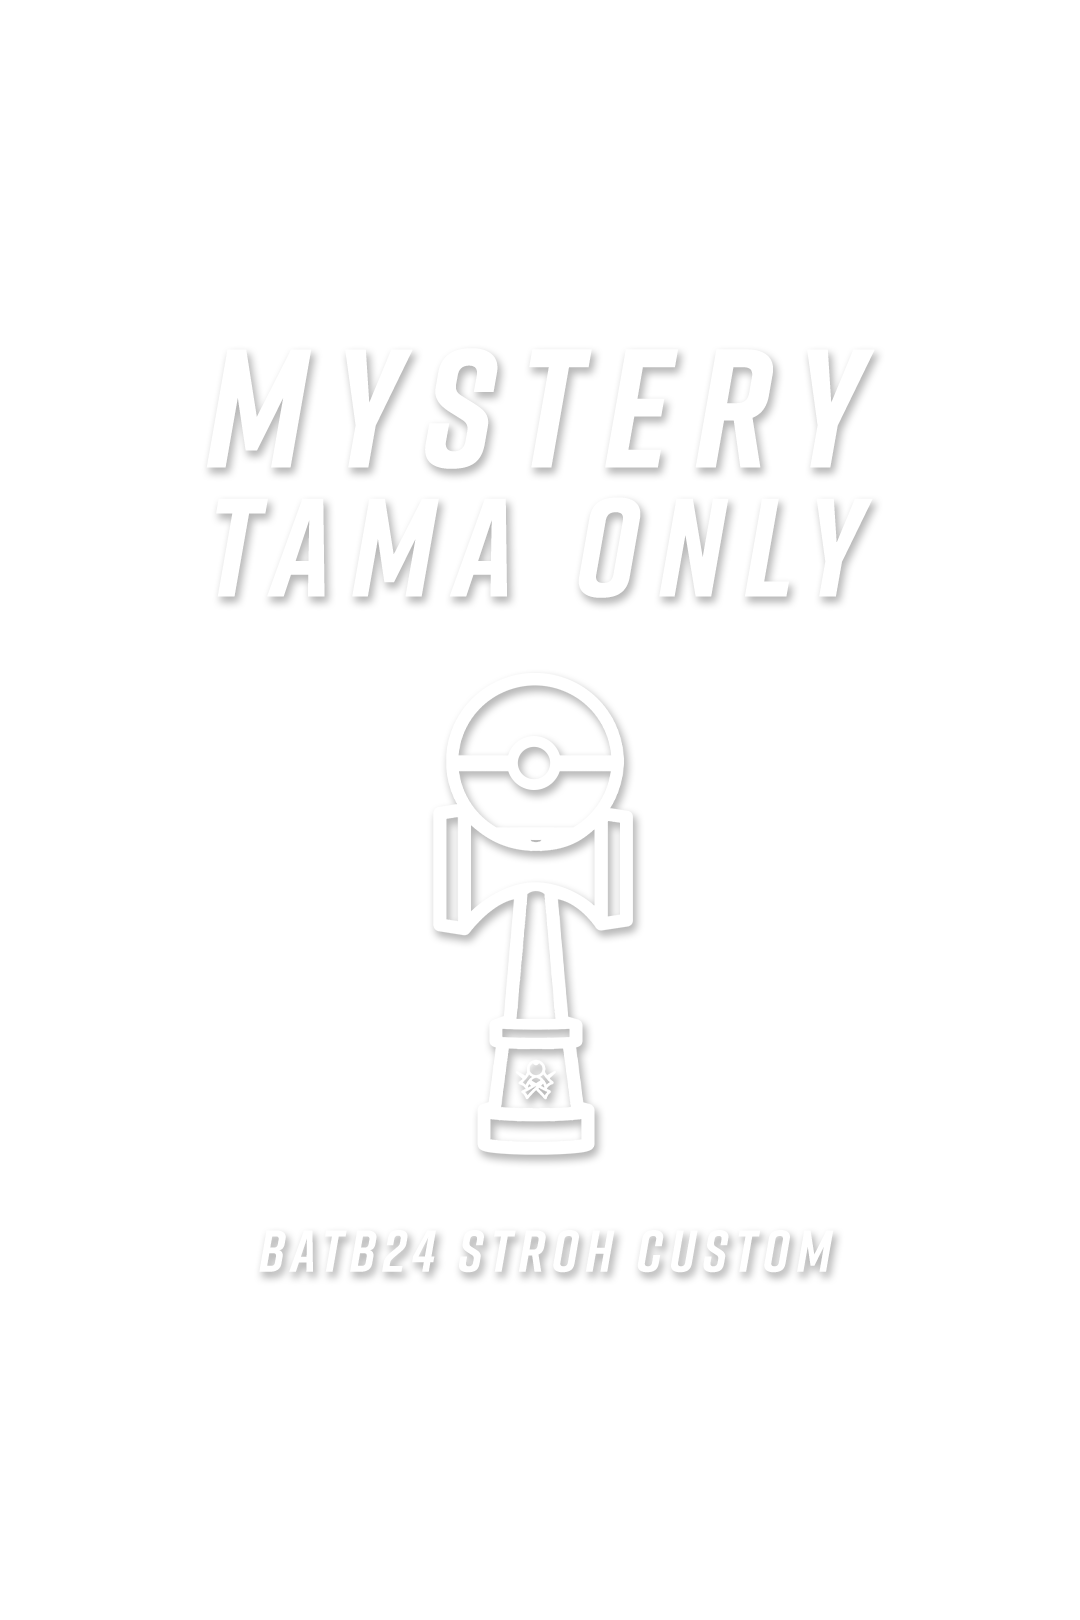 MYSTERY TAMA - BATB24 Stroh Custom